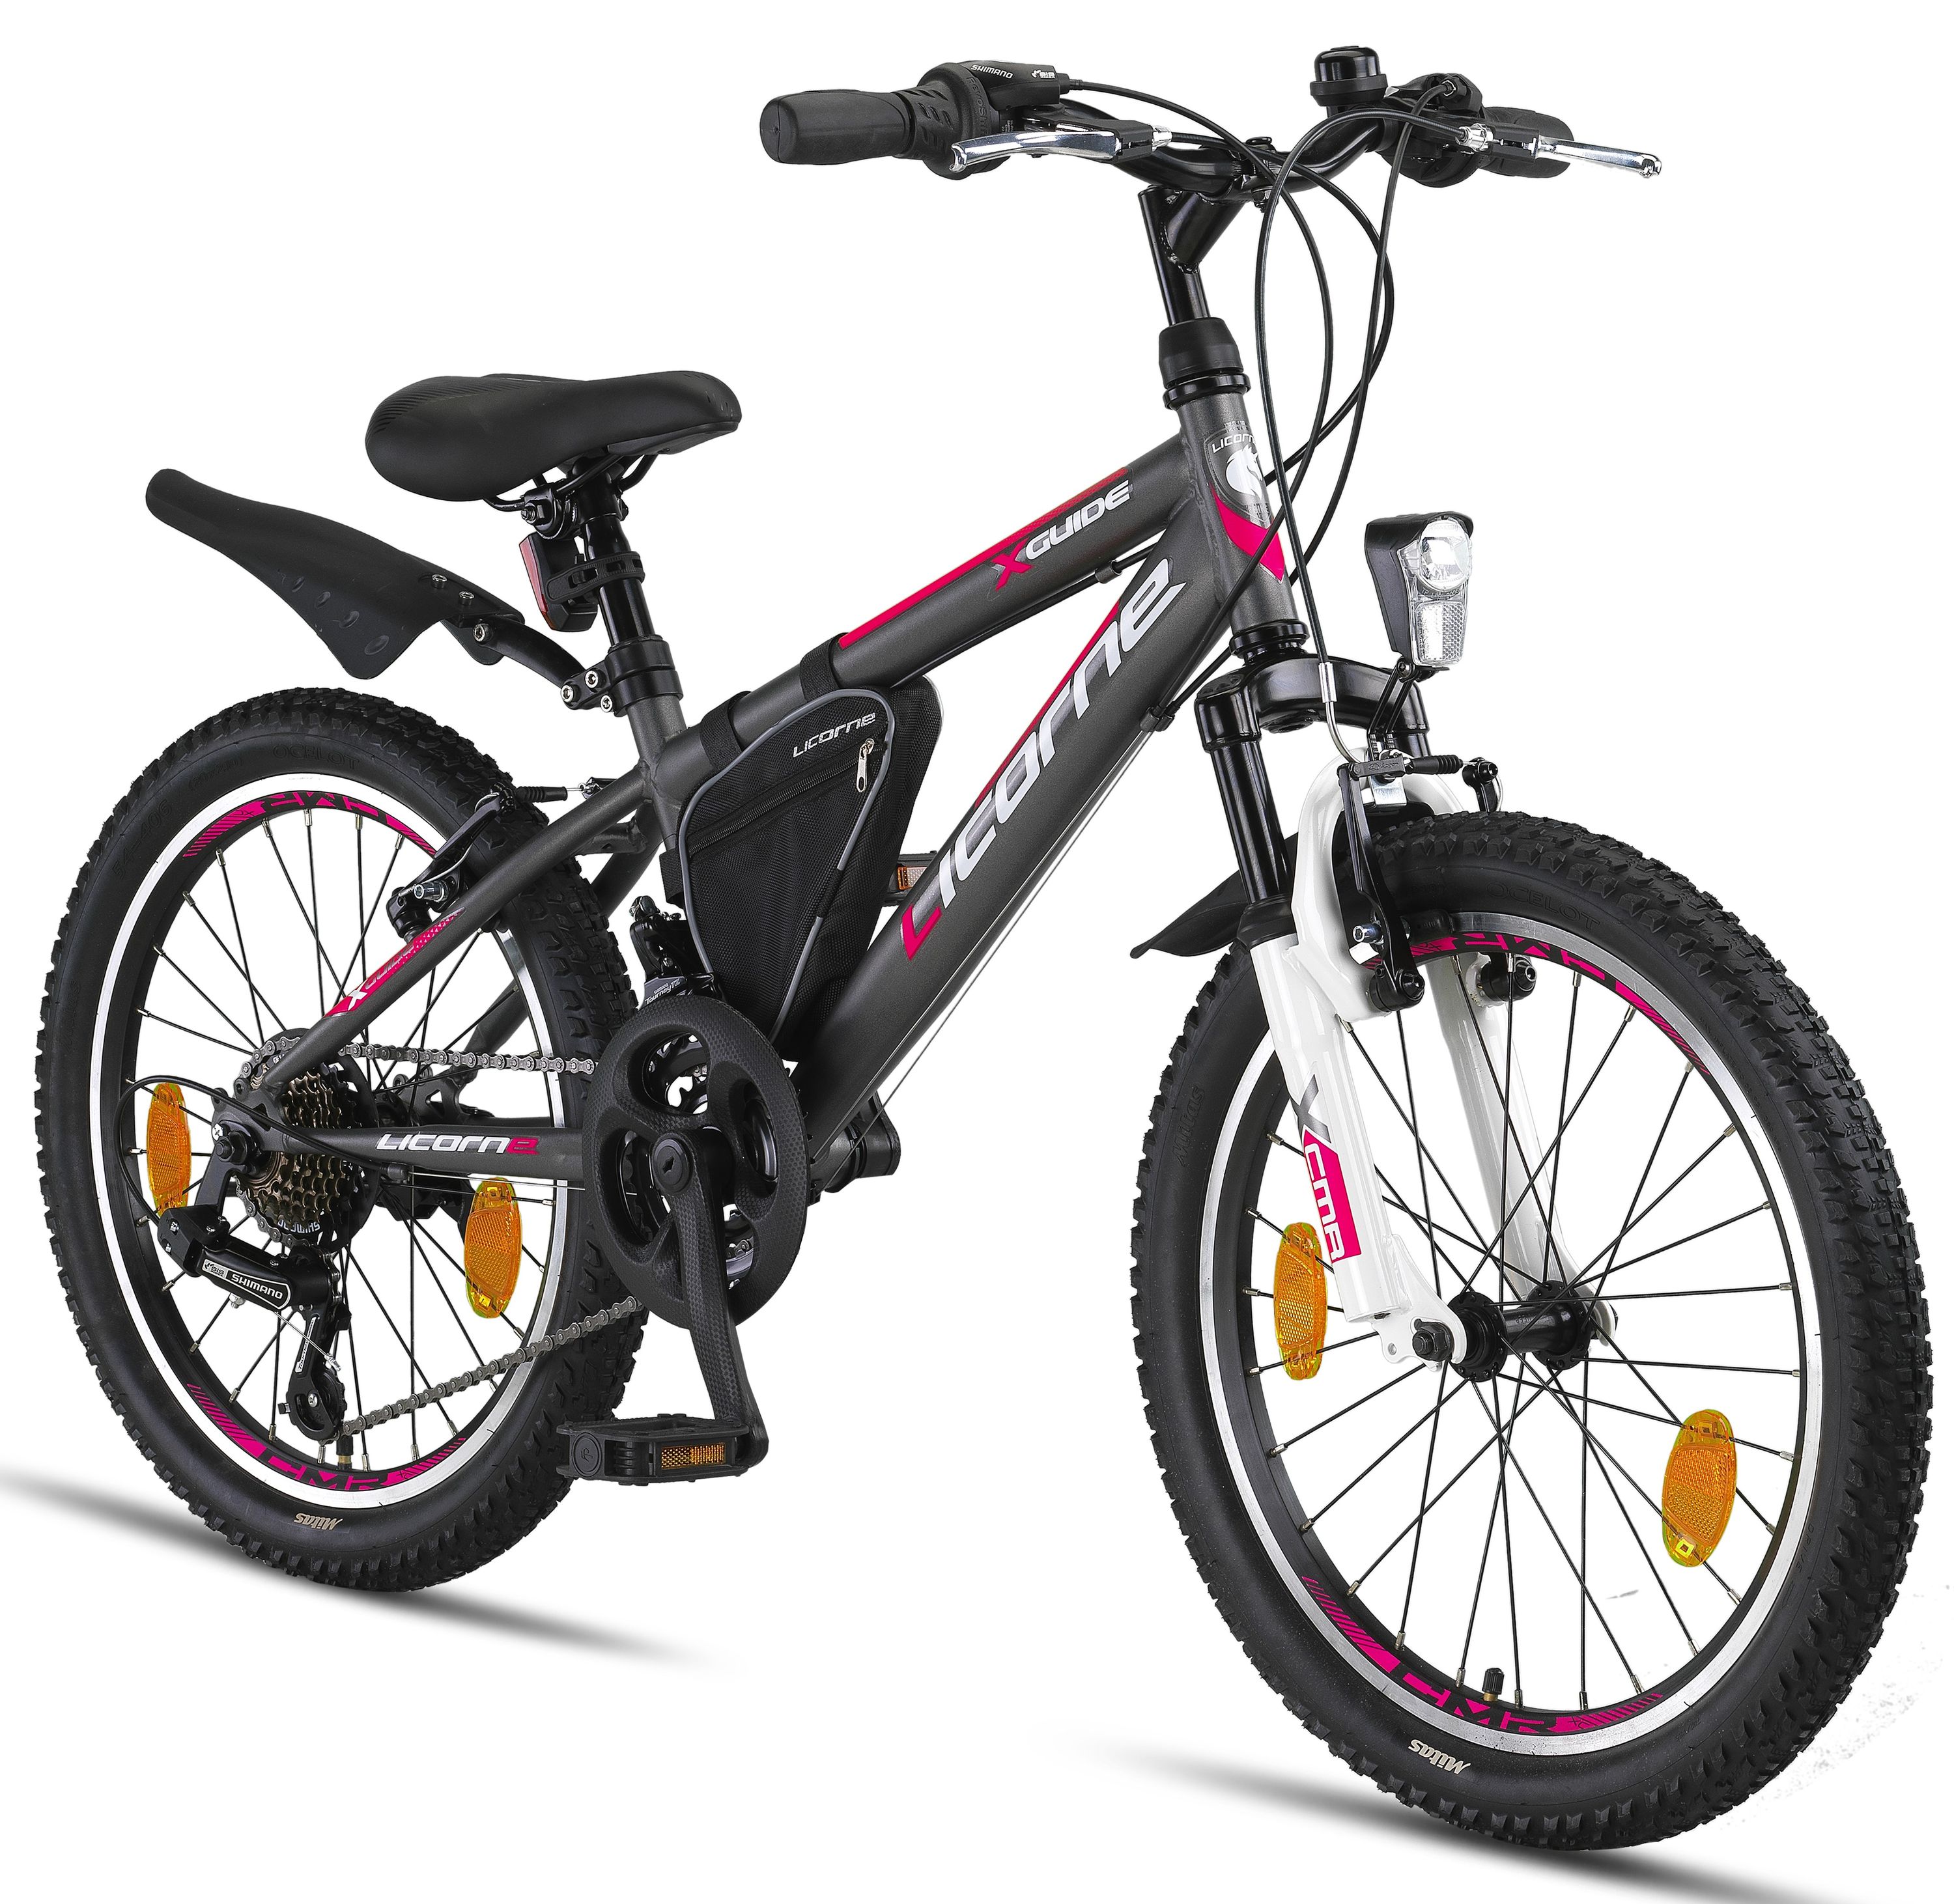 Licorne Bike Guide Premium mountain bike in 20, 24 and 26 inch - bike for girls, boys, men and women - Shimano 21 speed gears, children's bike, kids